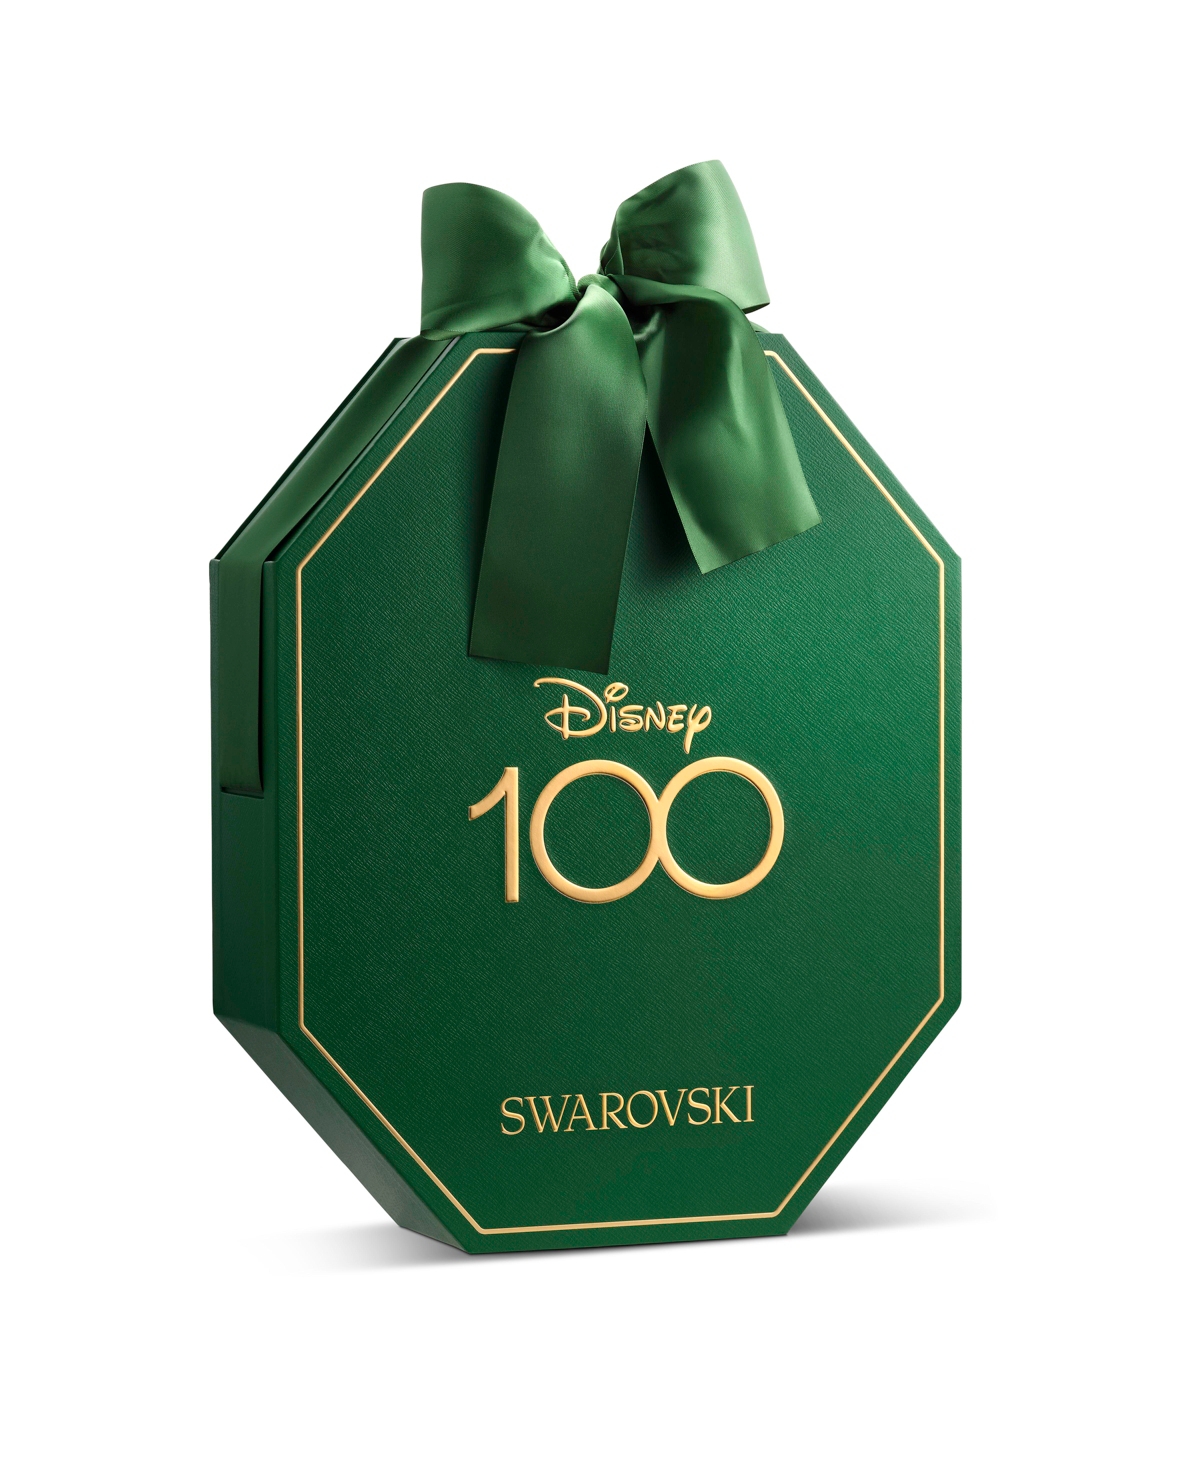 Swarovski Disney 100th Anniversary Advent Calendar In Green